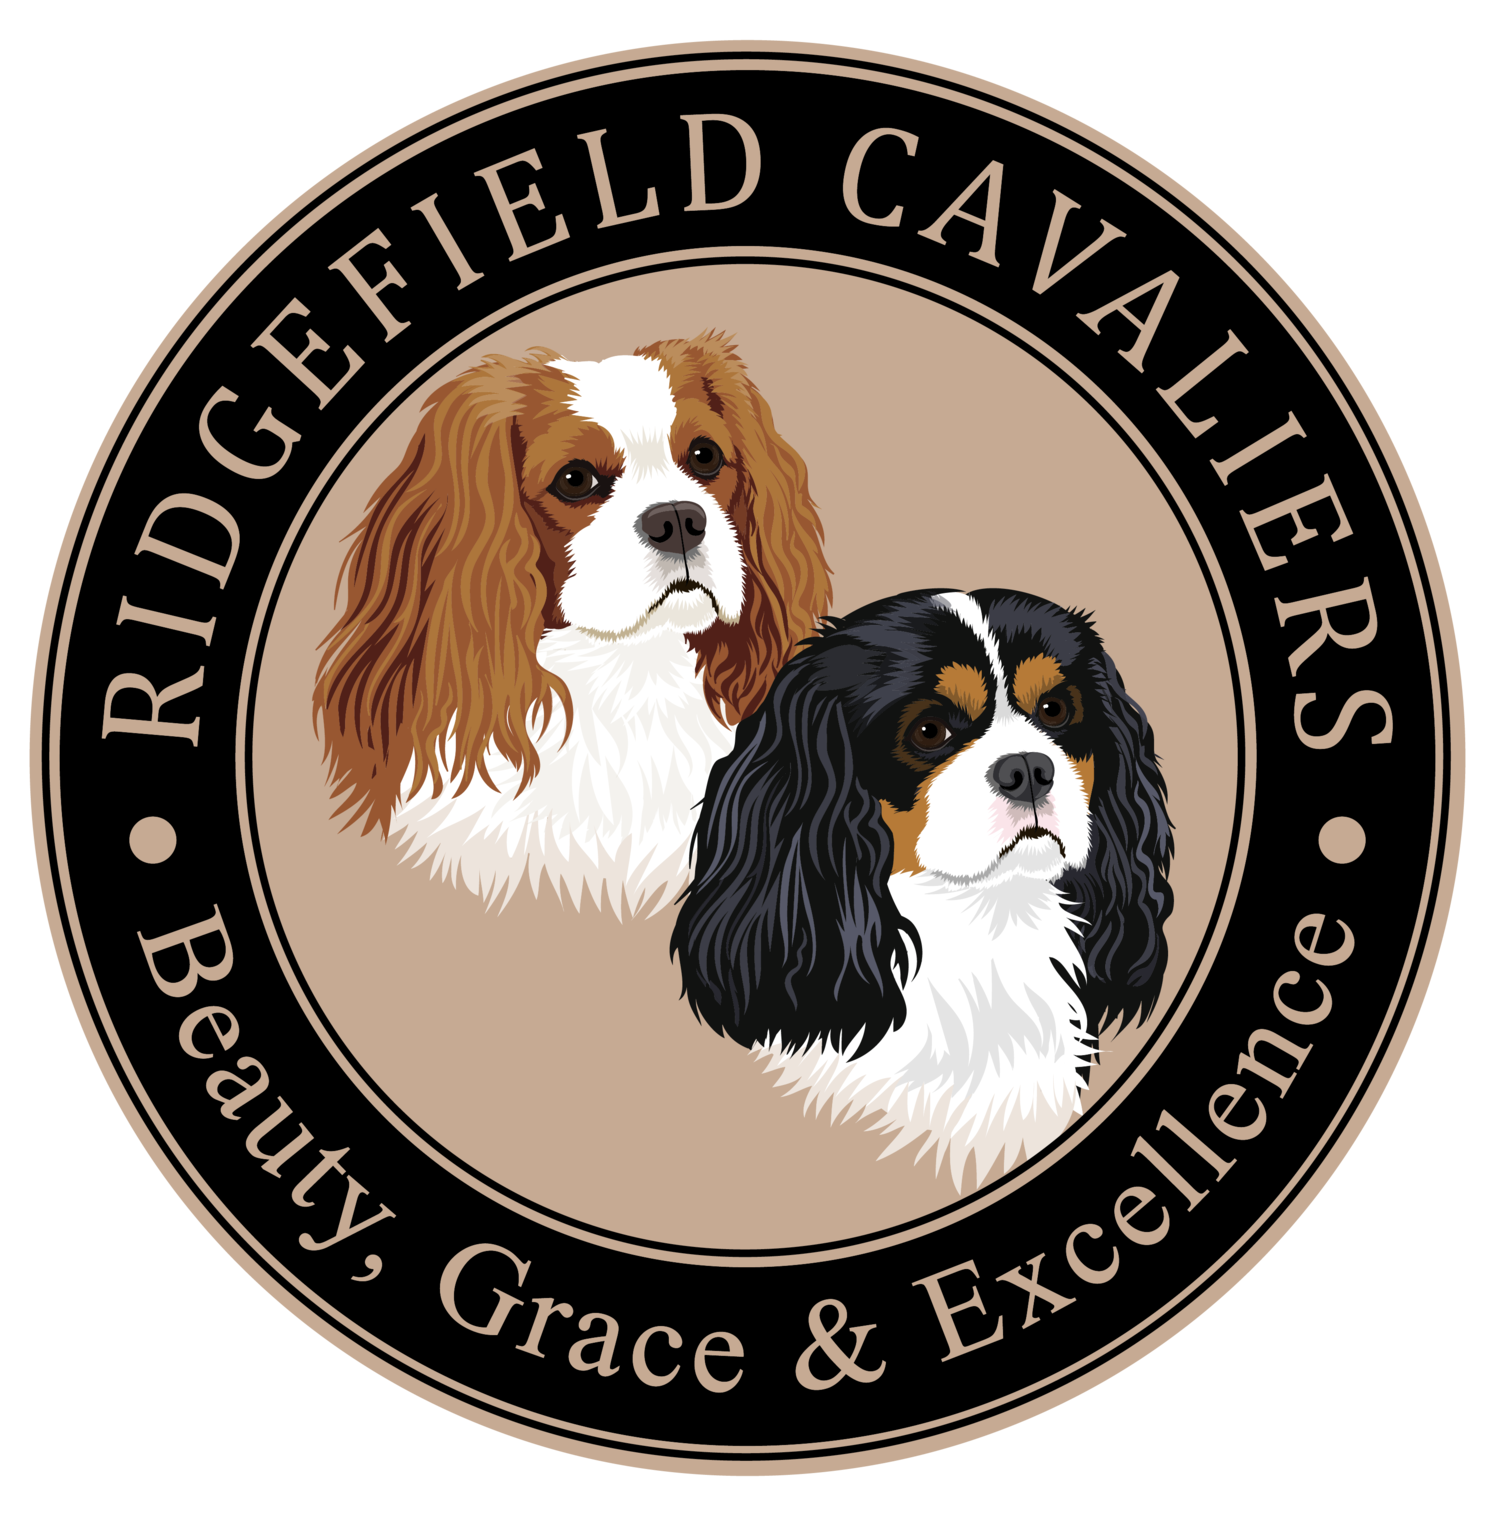 Ridgefield Cavaliers